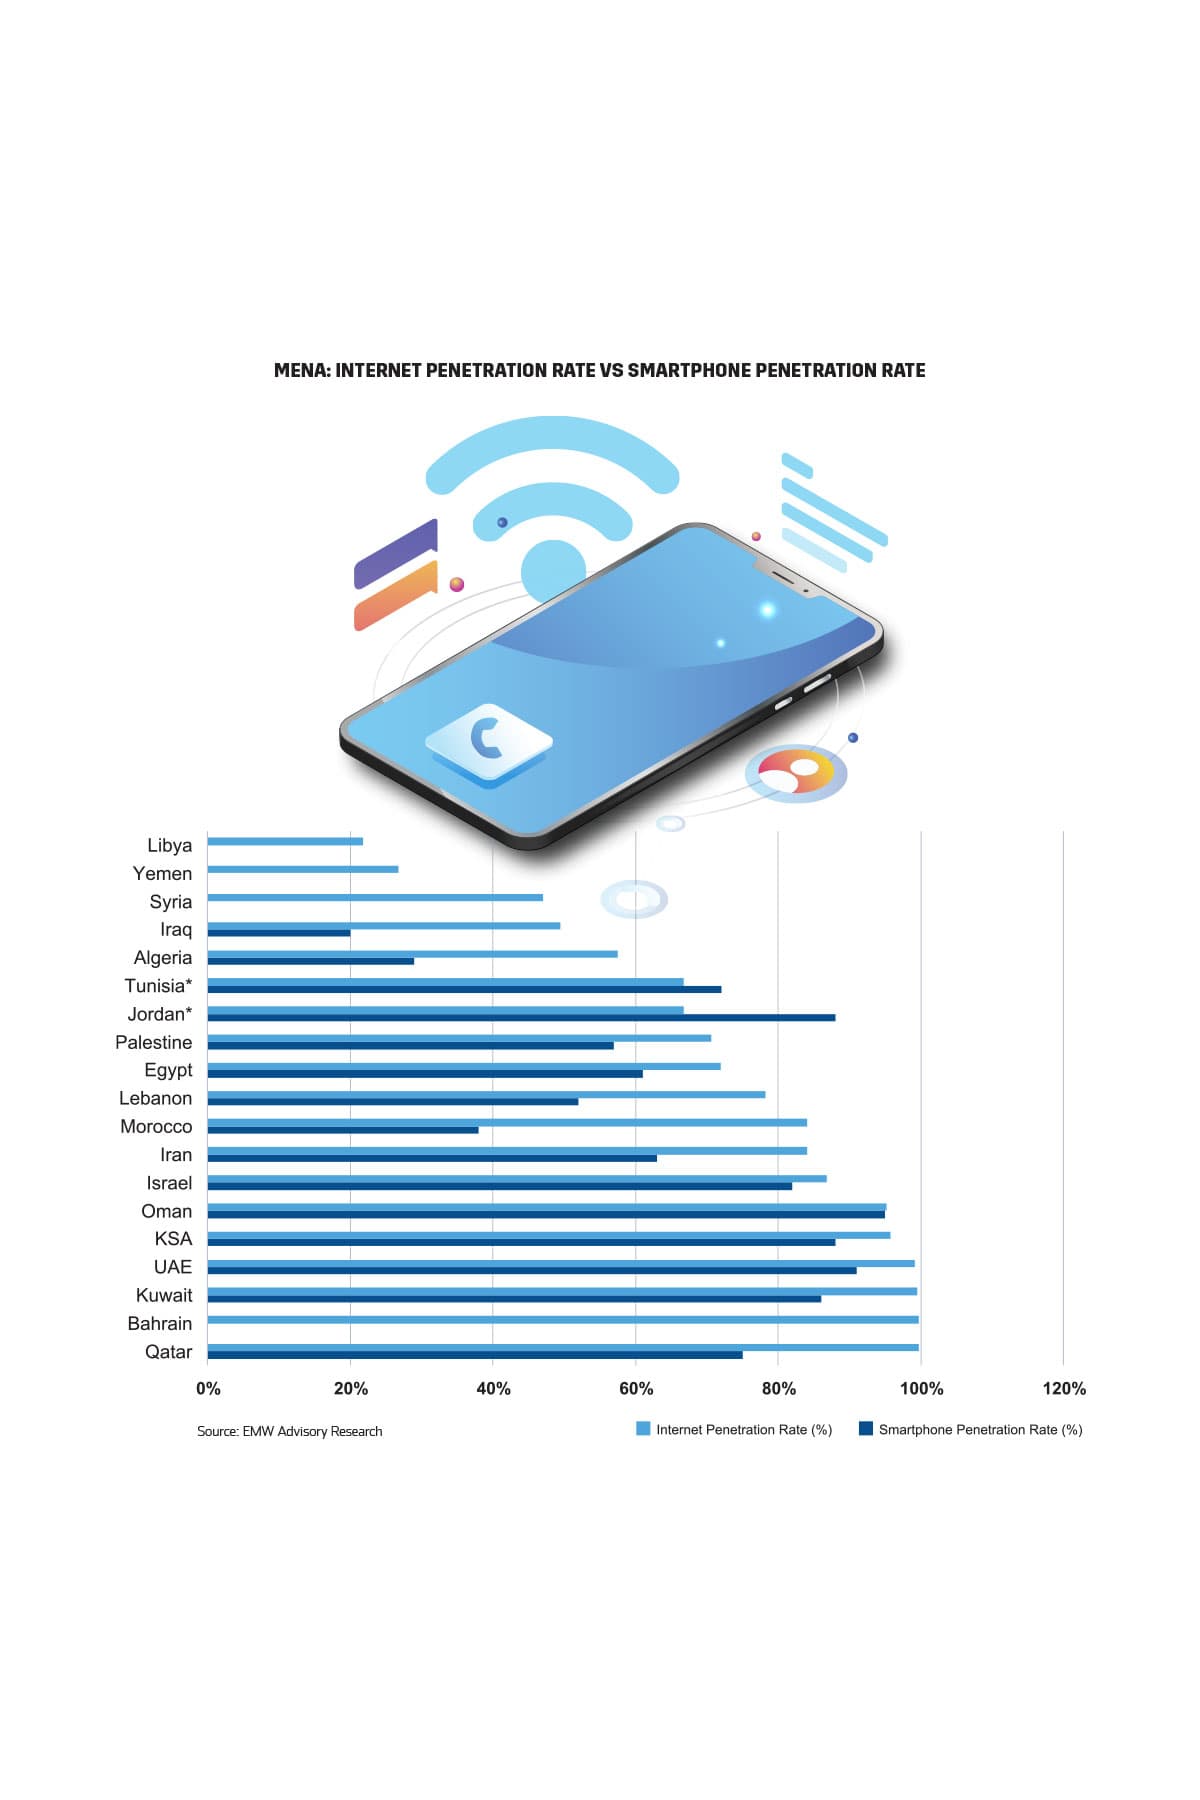 MENA: Internet Penetration Rate vs Smartphone Penetration Rate